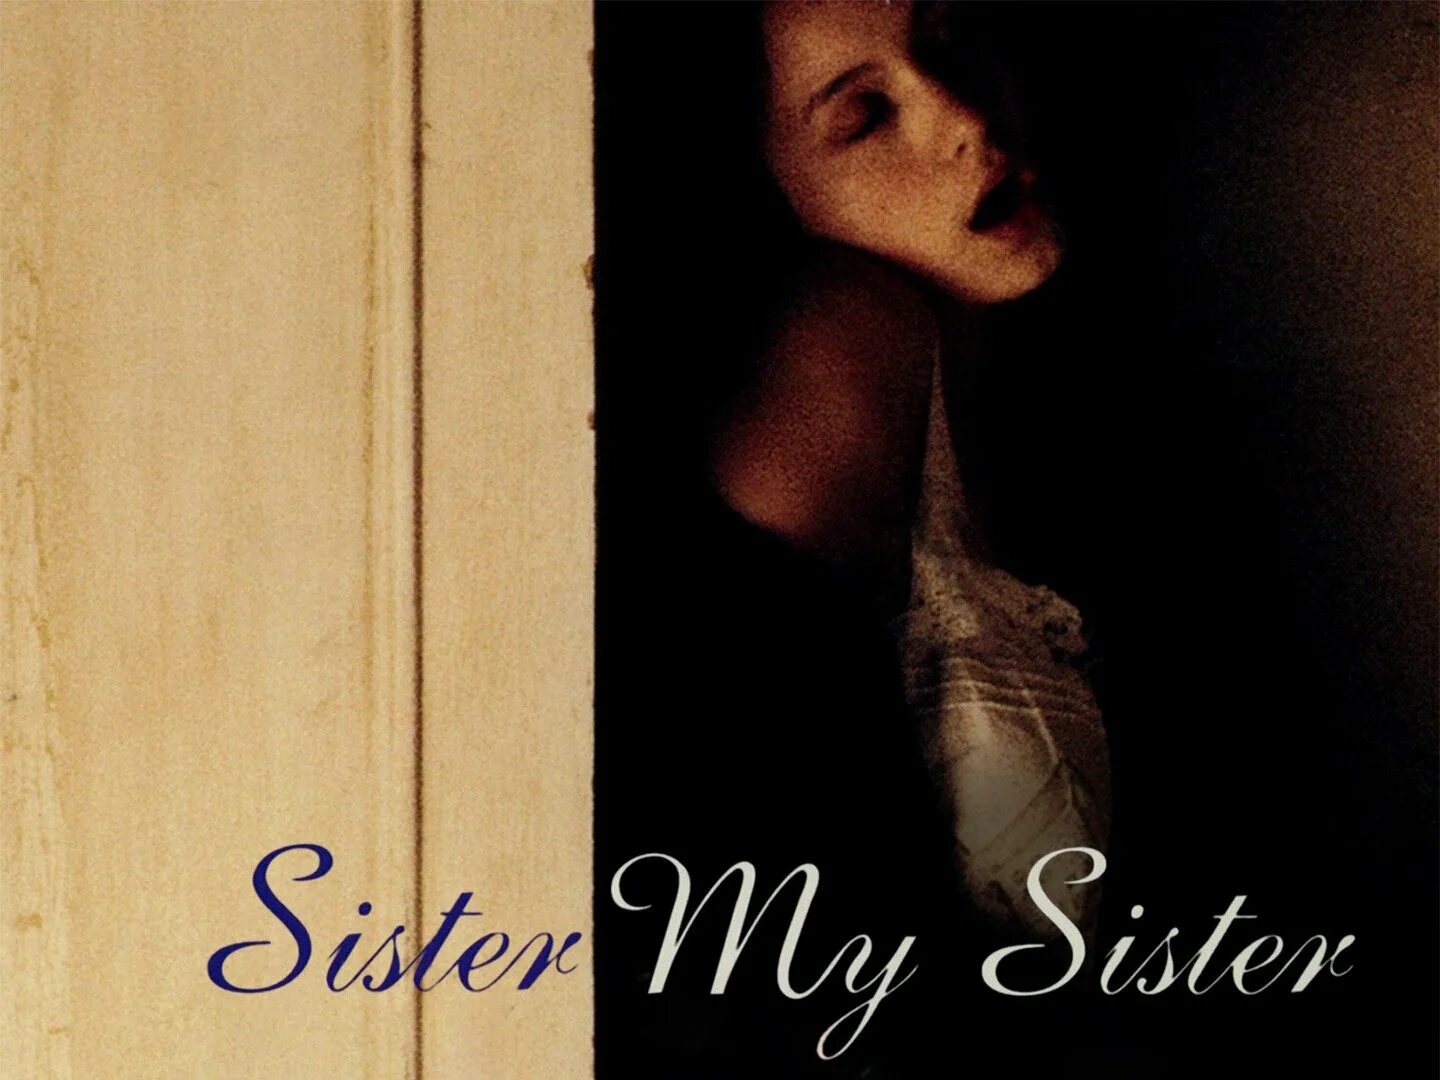 Сестра моя сестра (1994). My sister. My sister Giorgia игра. My sisters глаза открылись.